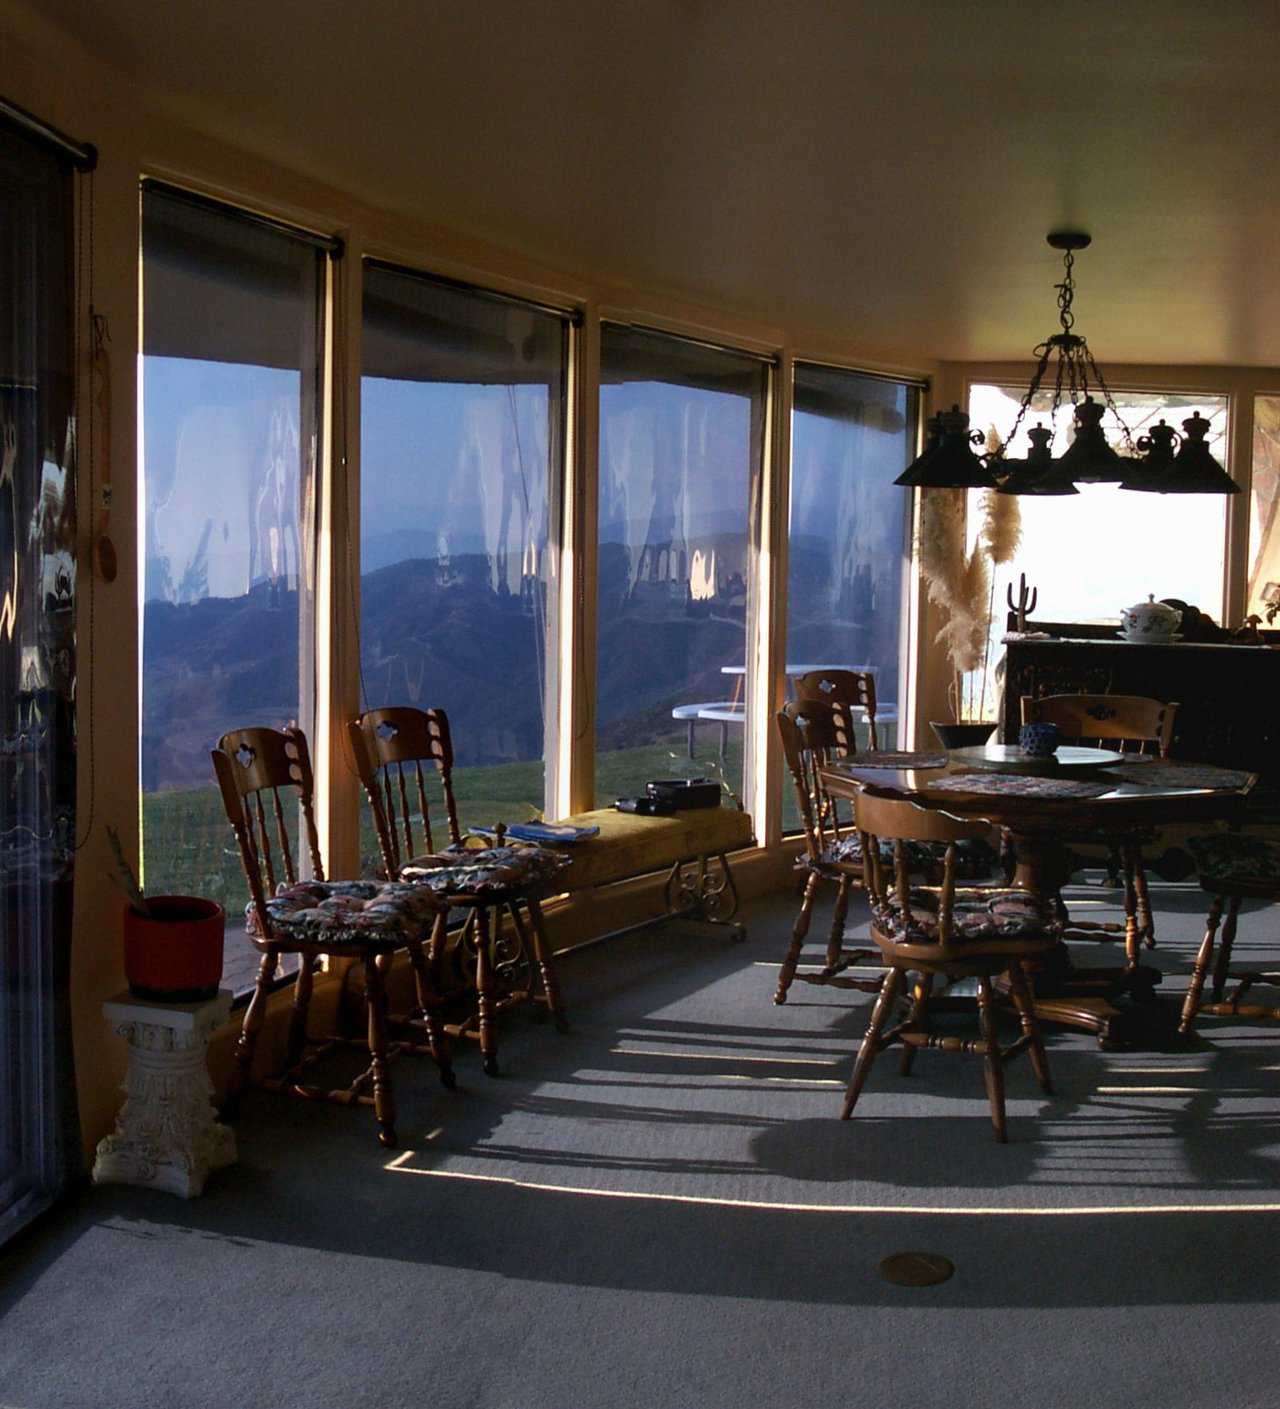 Generous Windows — Every morning, sunshine wakes this inviting breakfast area.